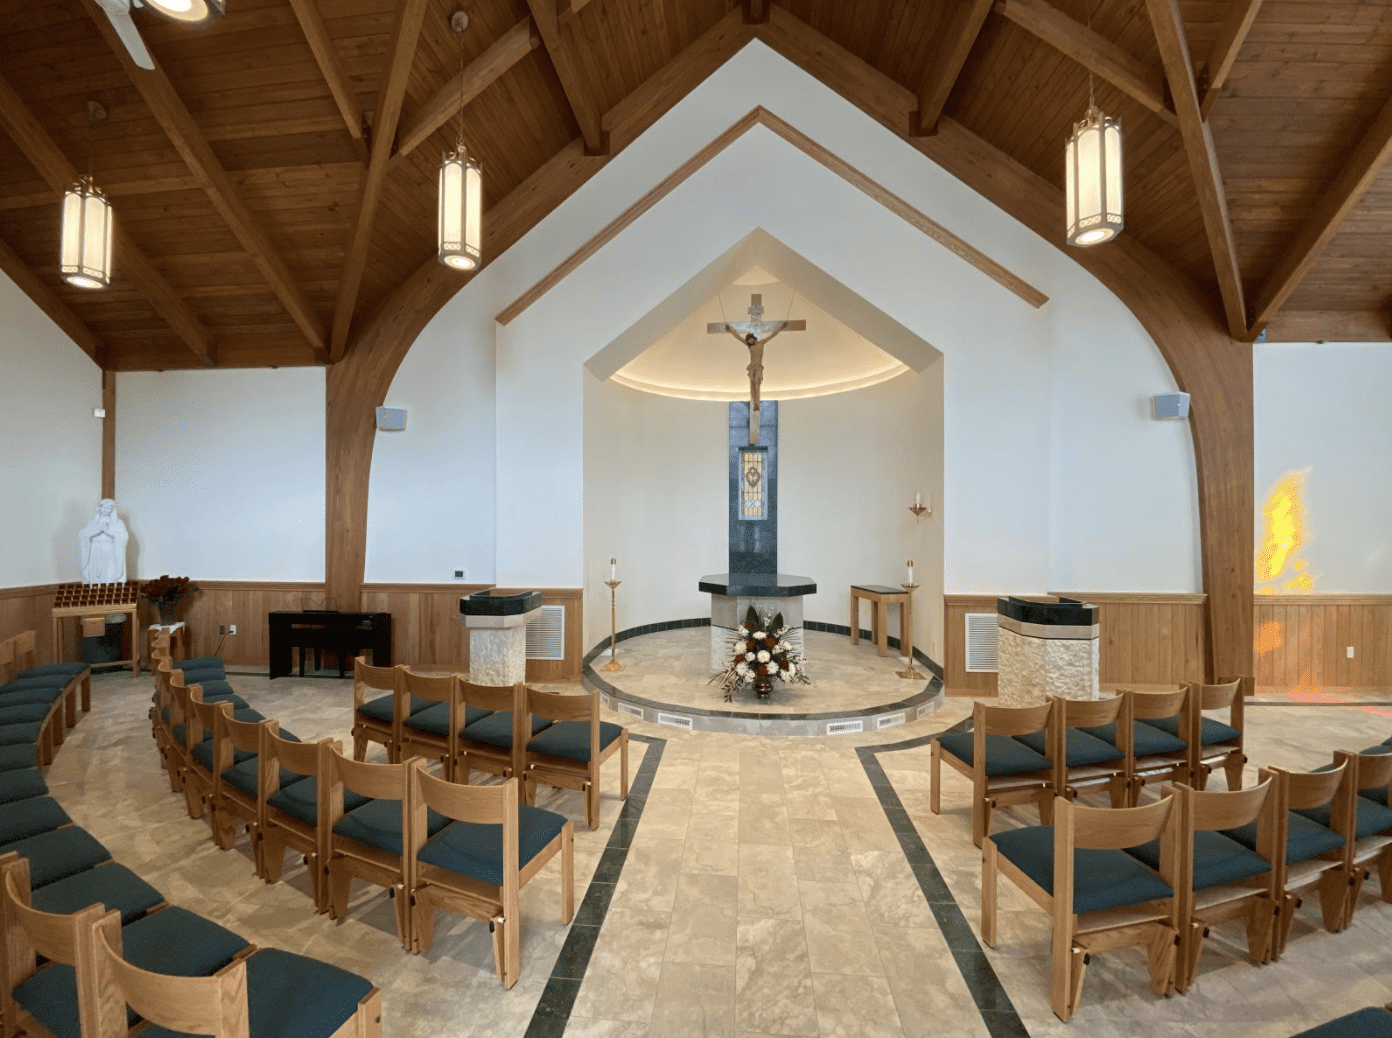 Saint Elizabeth in Wyckoff builds new Daily Mass Chapel